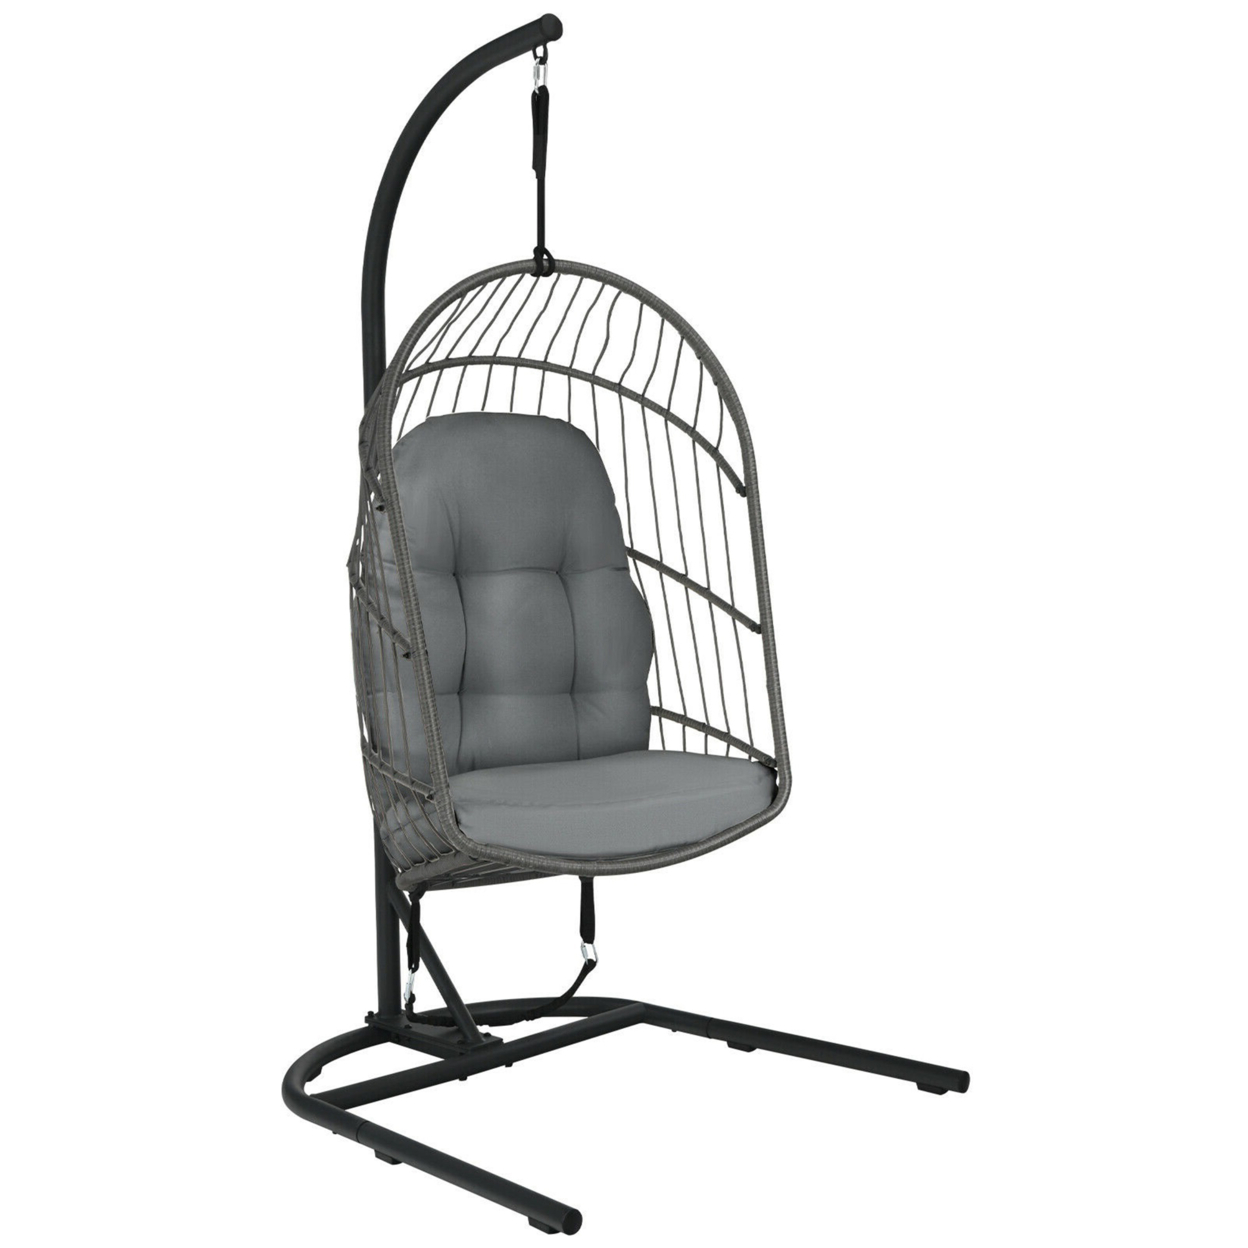 Hanging Hammock Egg Chair Patio Rattan Swing Chair W/ Stand & Cushions - Grey